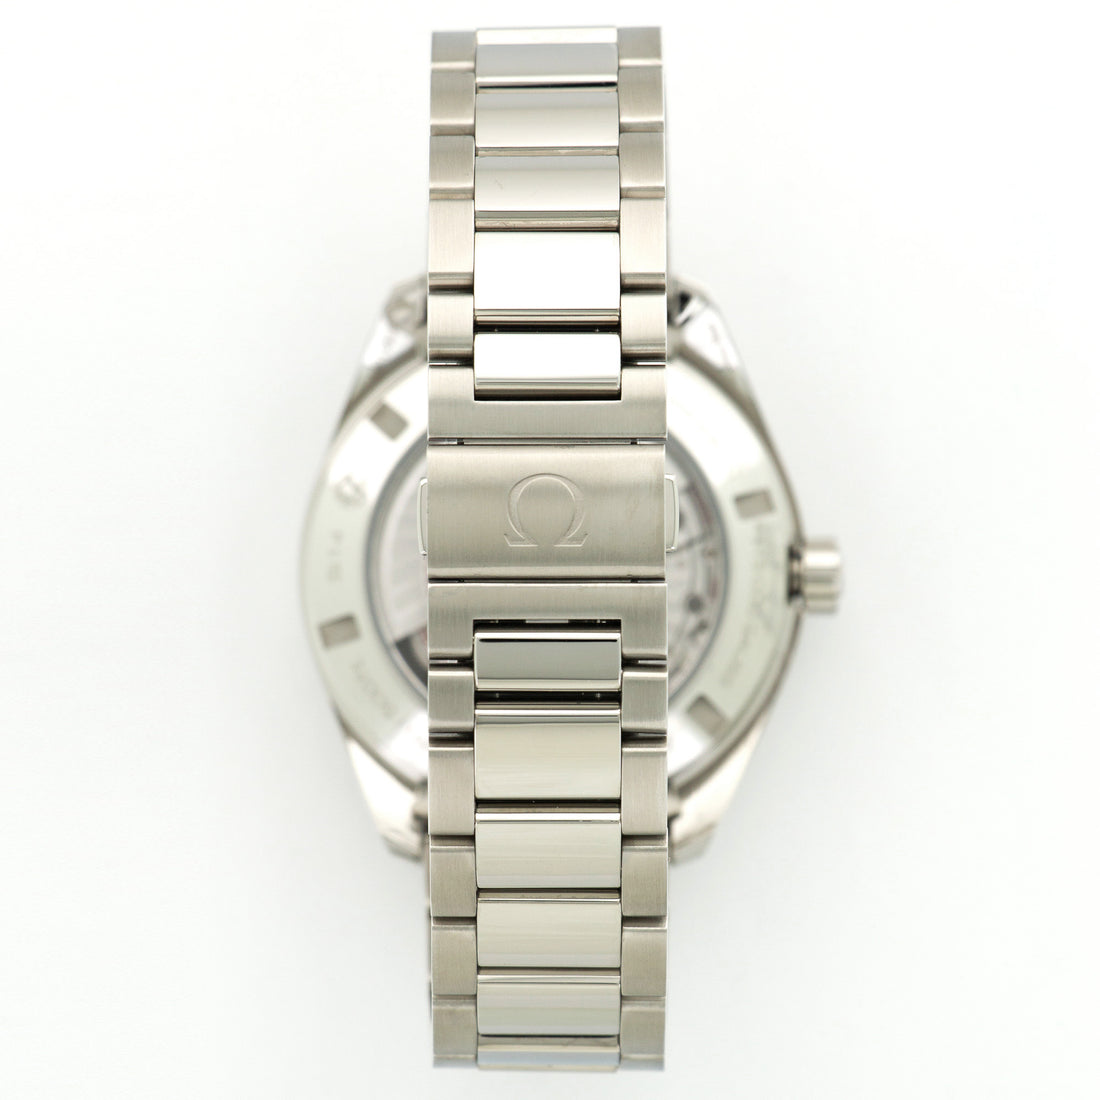 Omega Seamaster Aqua Terra Chronometer Tech Watch